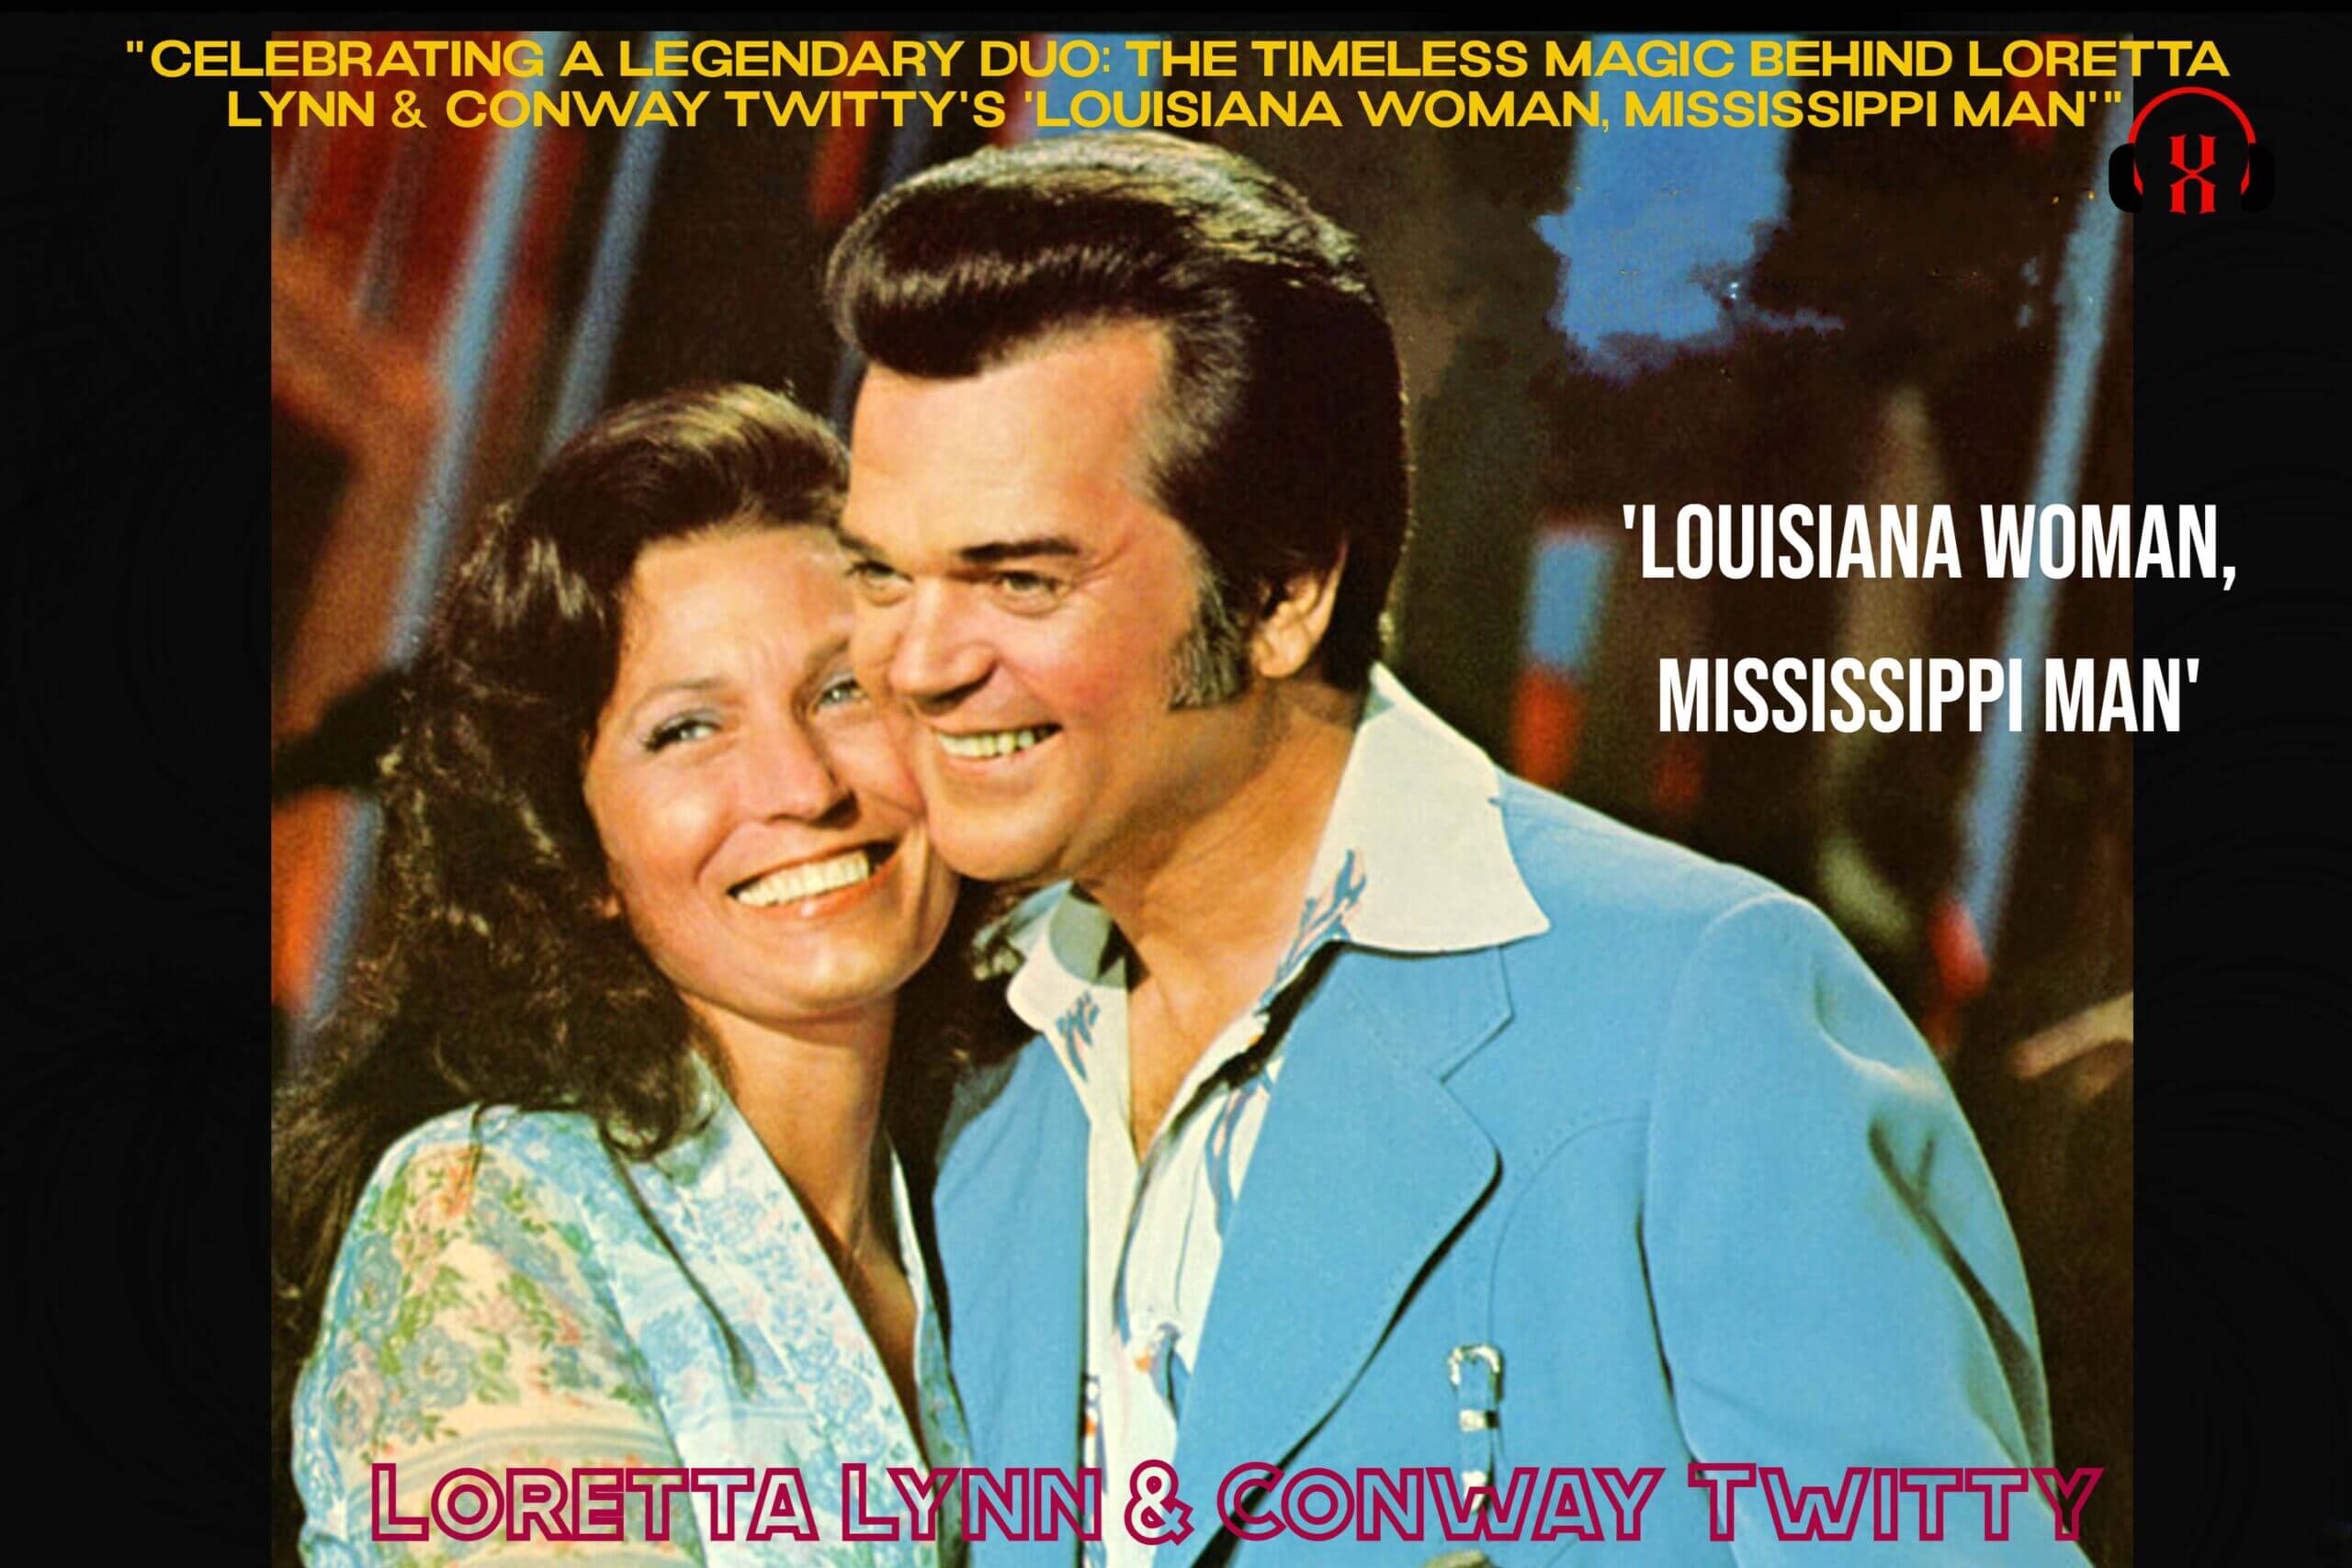 Loretta Lynn & Conway Twitty's 'Louisiana Woman, Mississippi Man'"